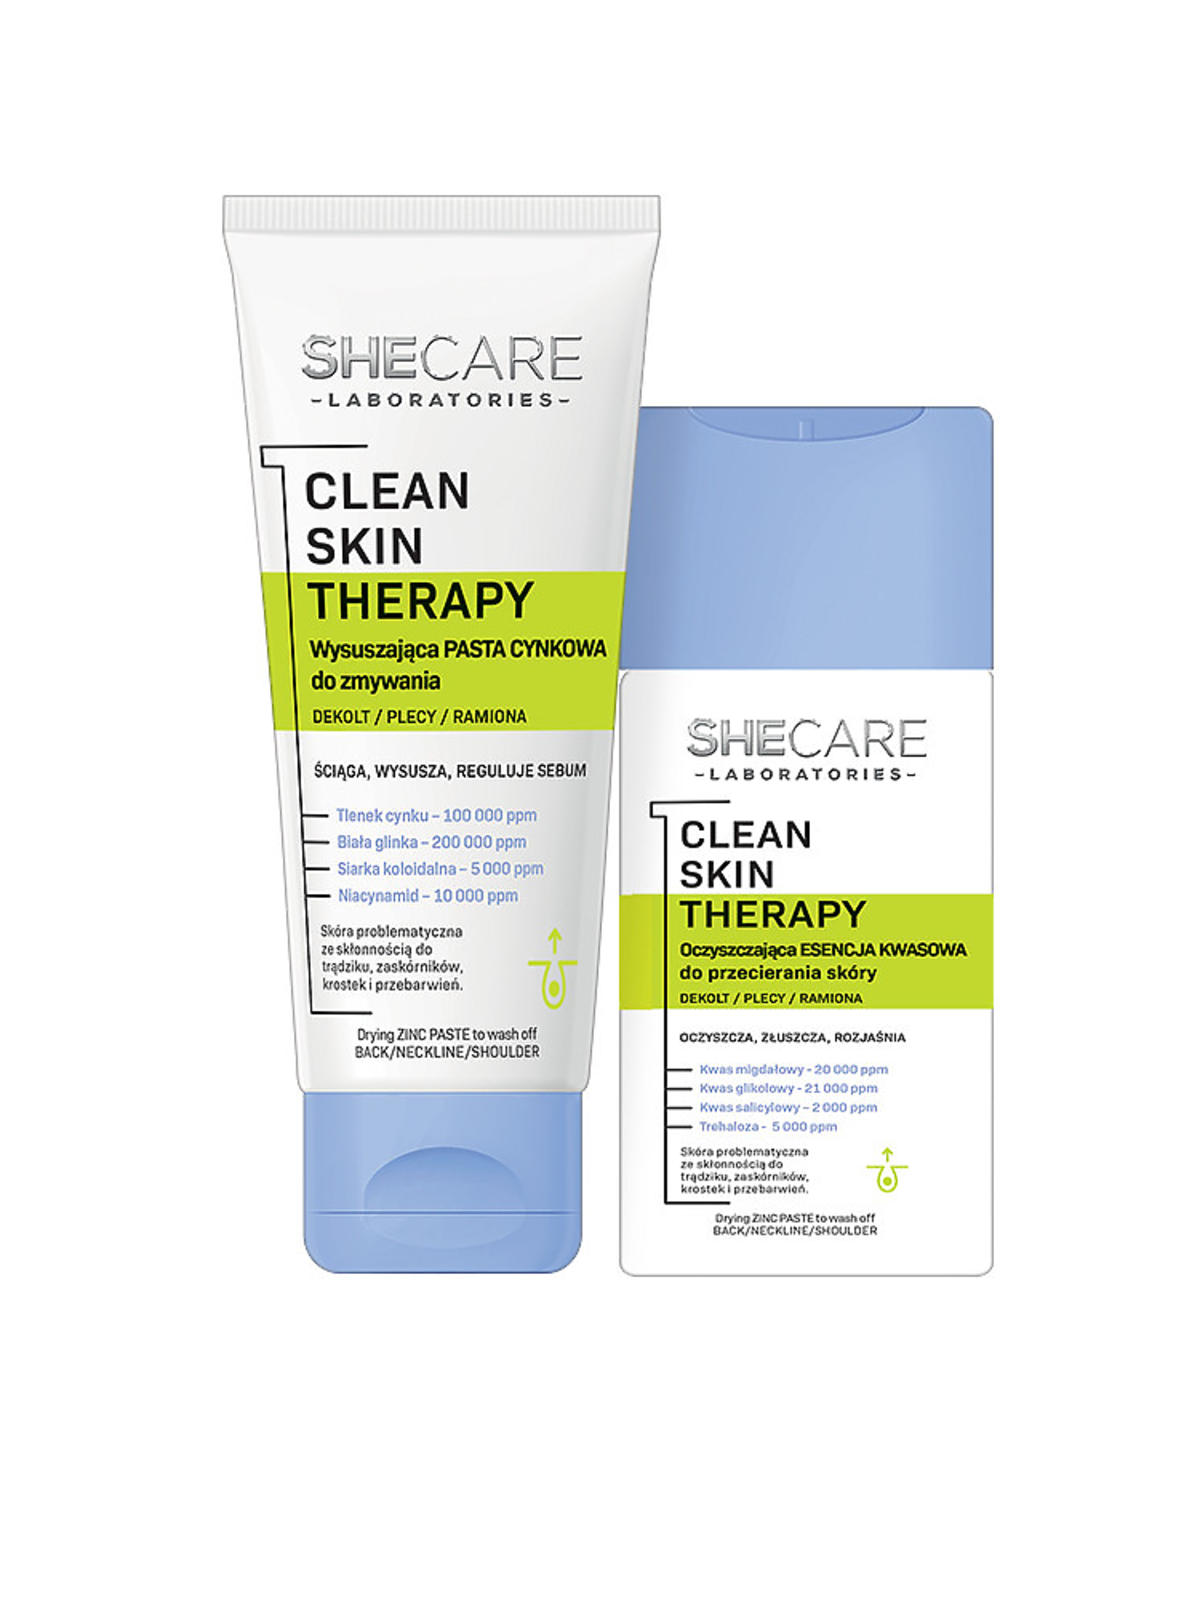 SheCare Laboratories Clean Skin Therapy